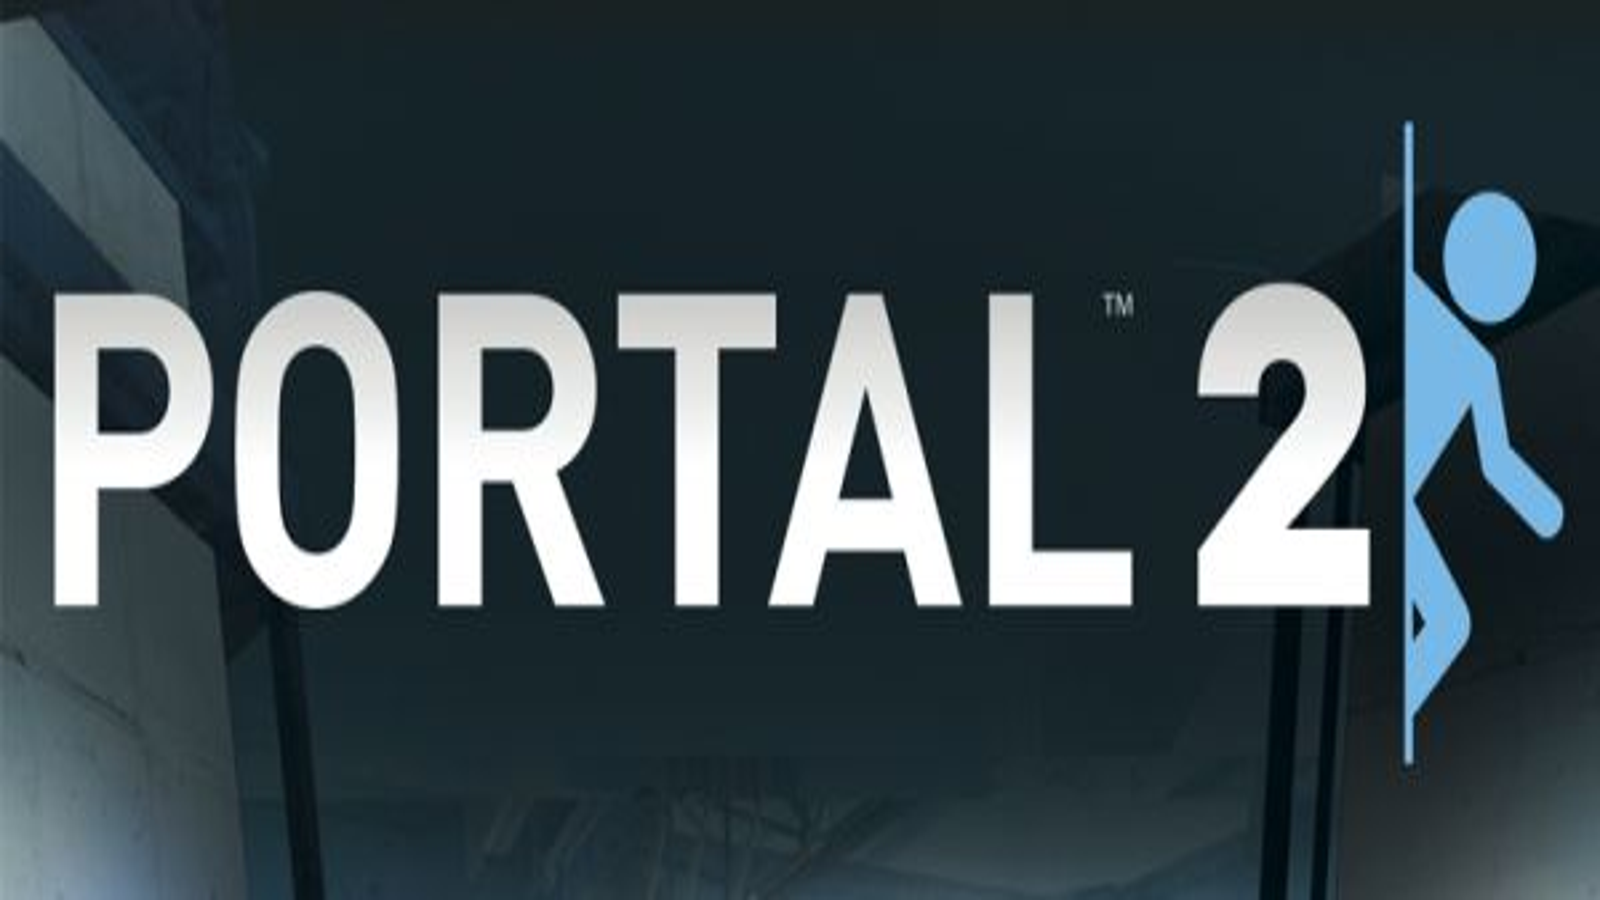 Thinking with Portals  Portal memes, Video games funny, Portal 2